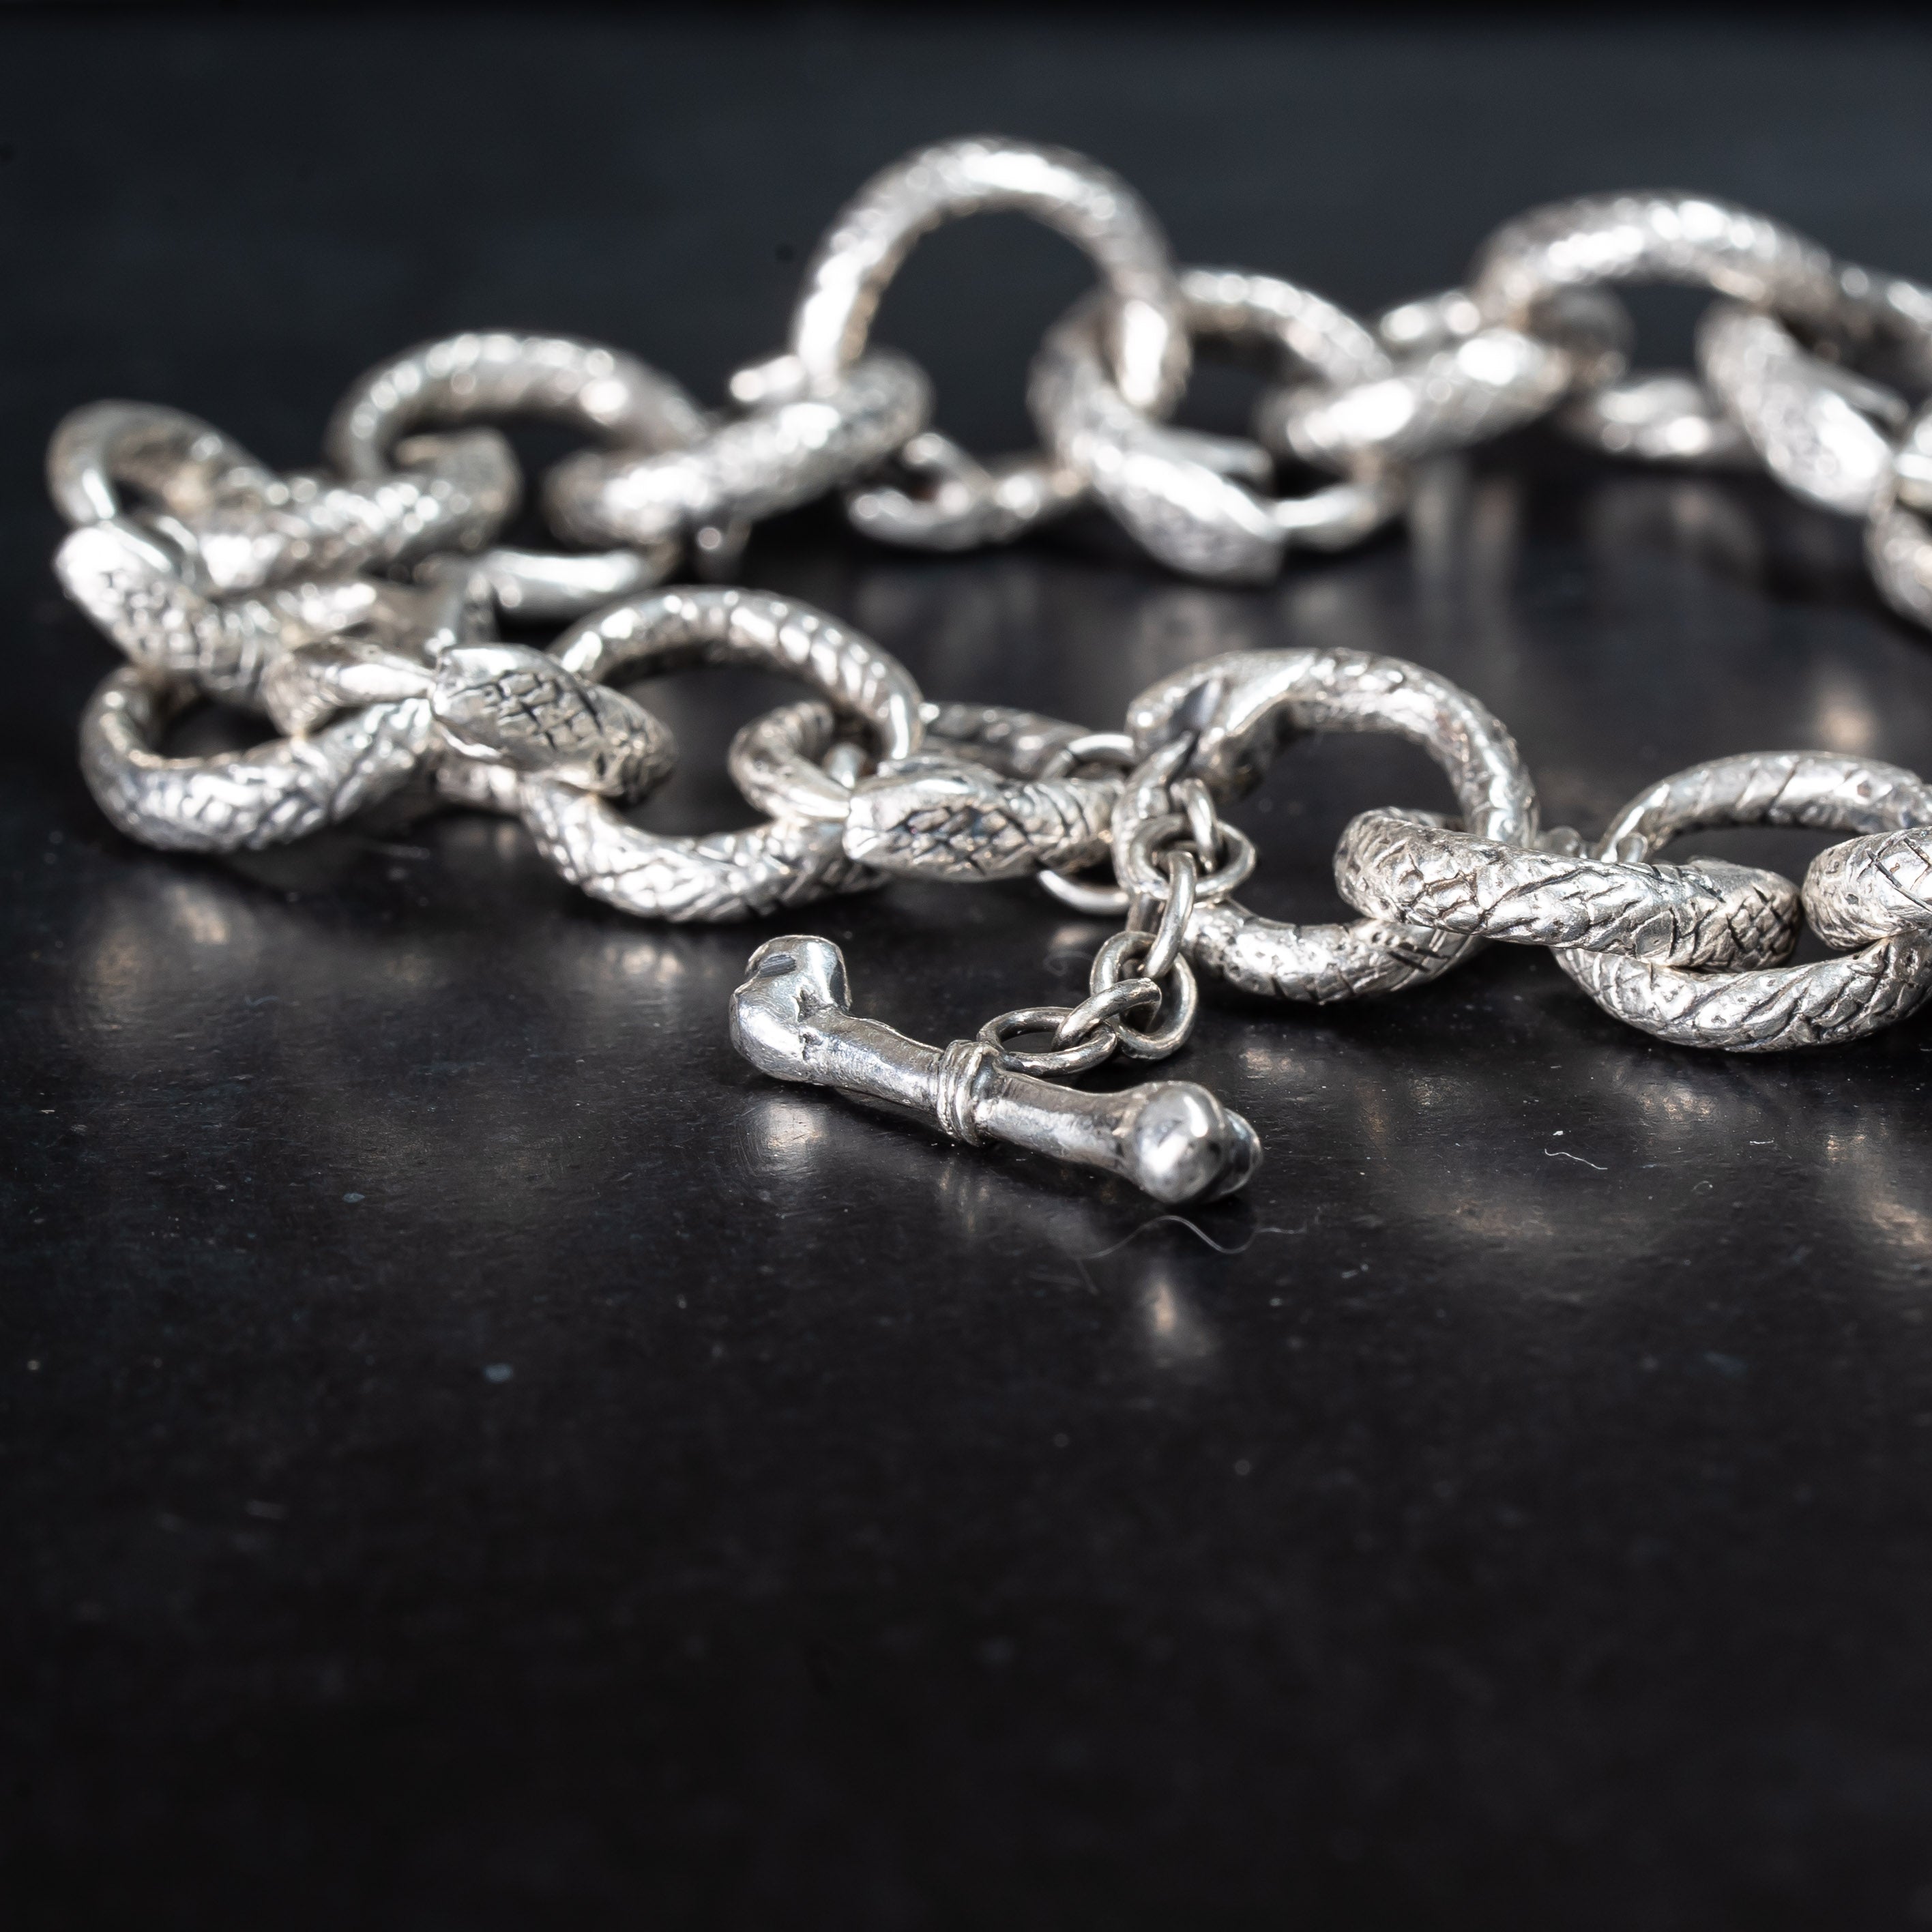 Snake bracelet close up detail. Handmade silver jewellery.